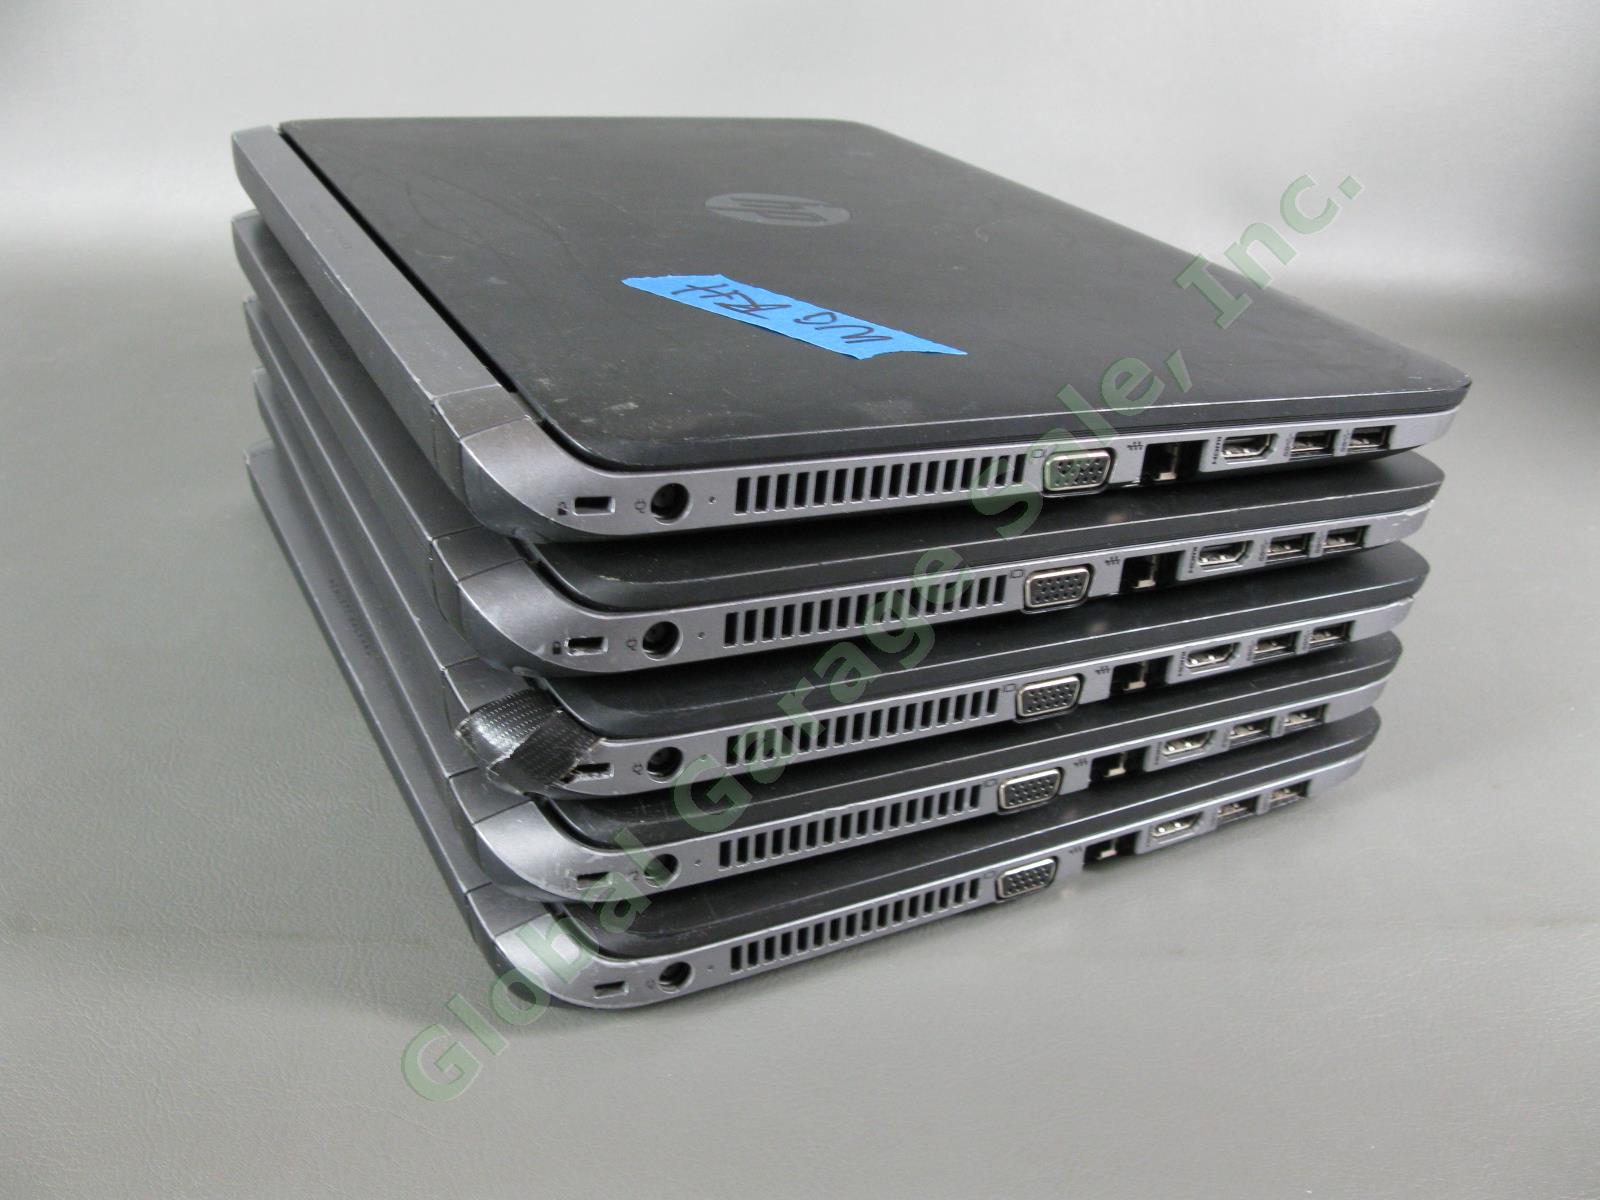 Lot of 5 HP ProBook 440 G2 i5-5200U 2.20GHz No HDD No RAM Laptop Computer Ready 2